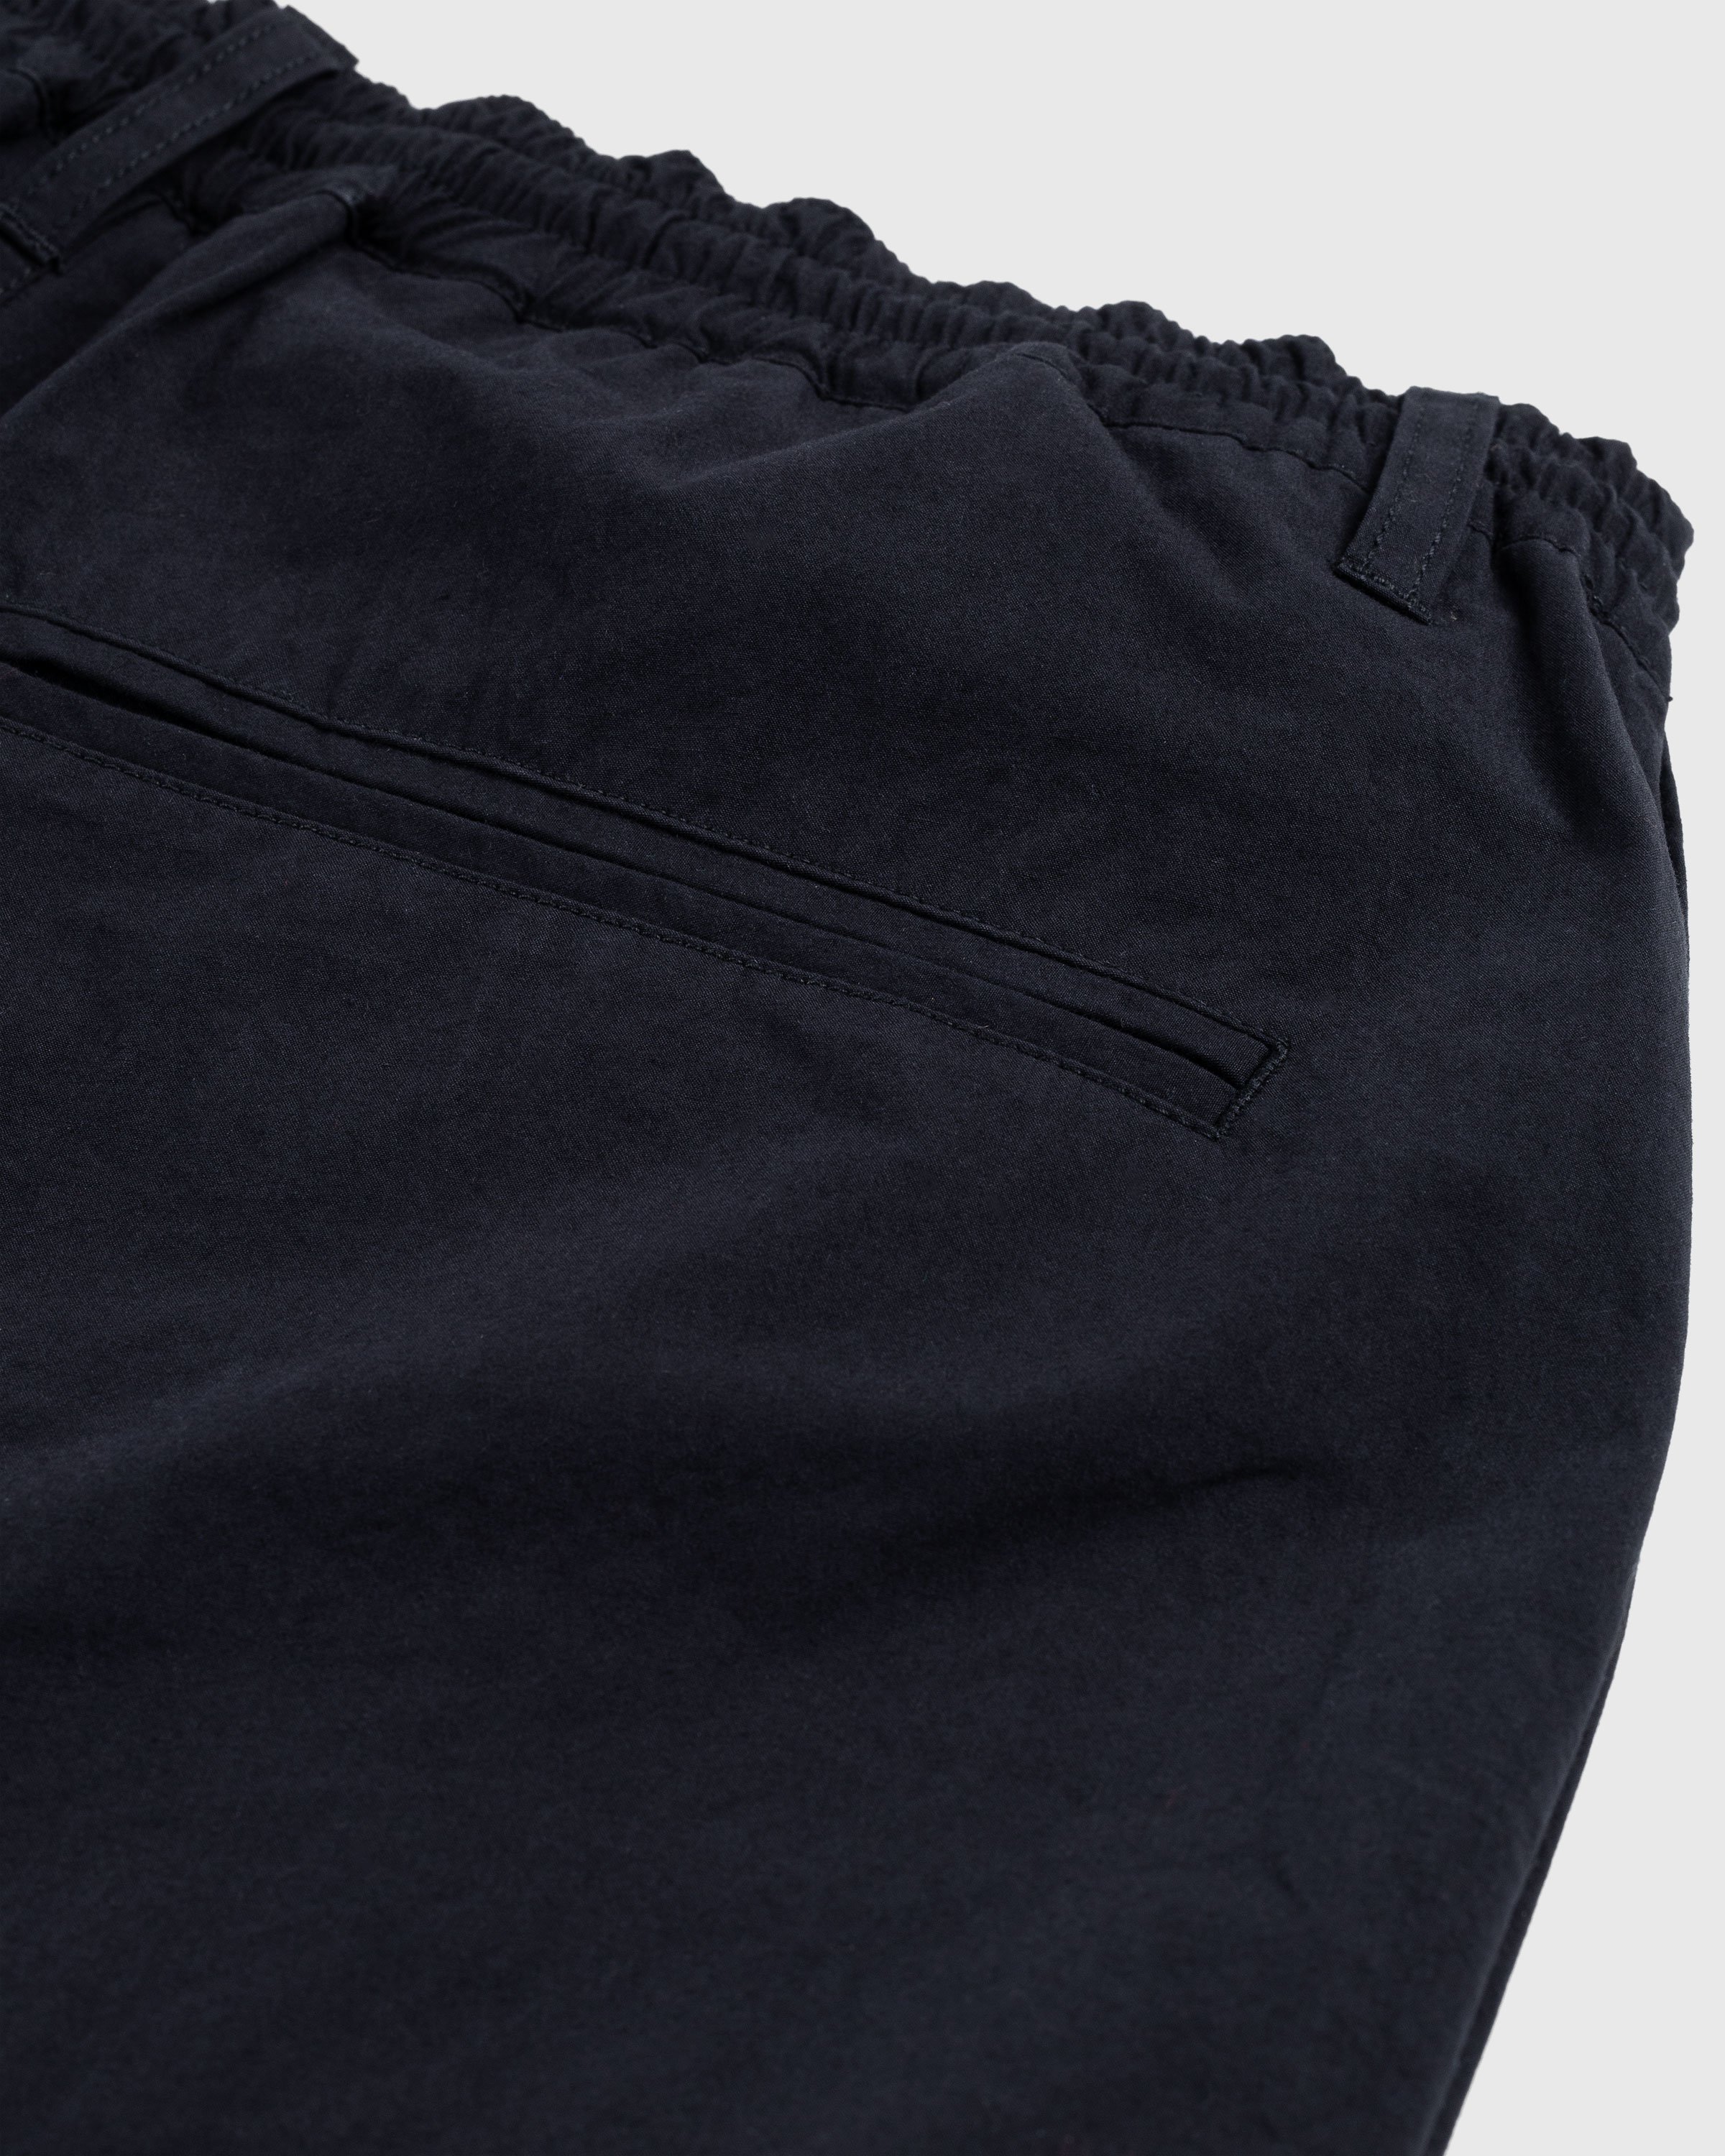 Highsnobiety HS05 - Reverse Piping Elastic Trouser Black - Clothing - Black - Image 7